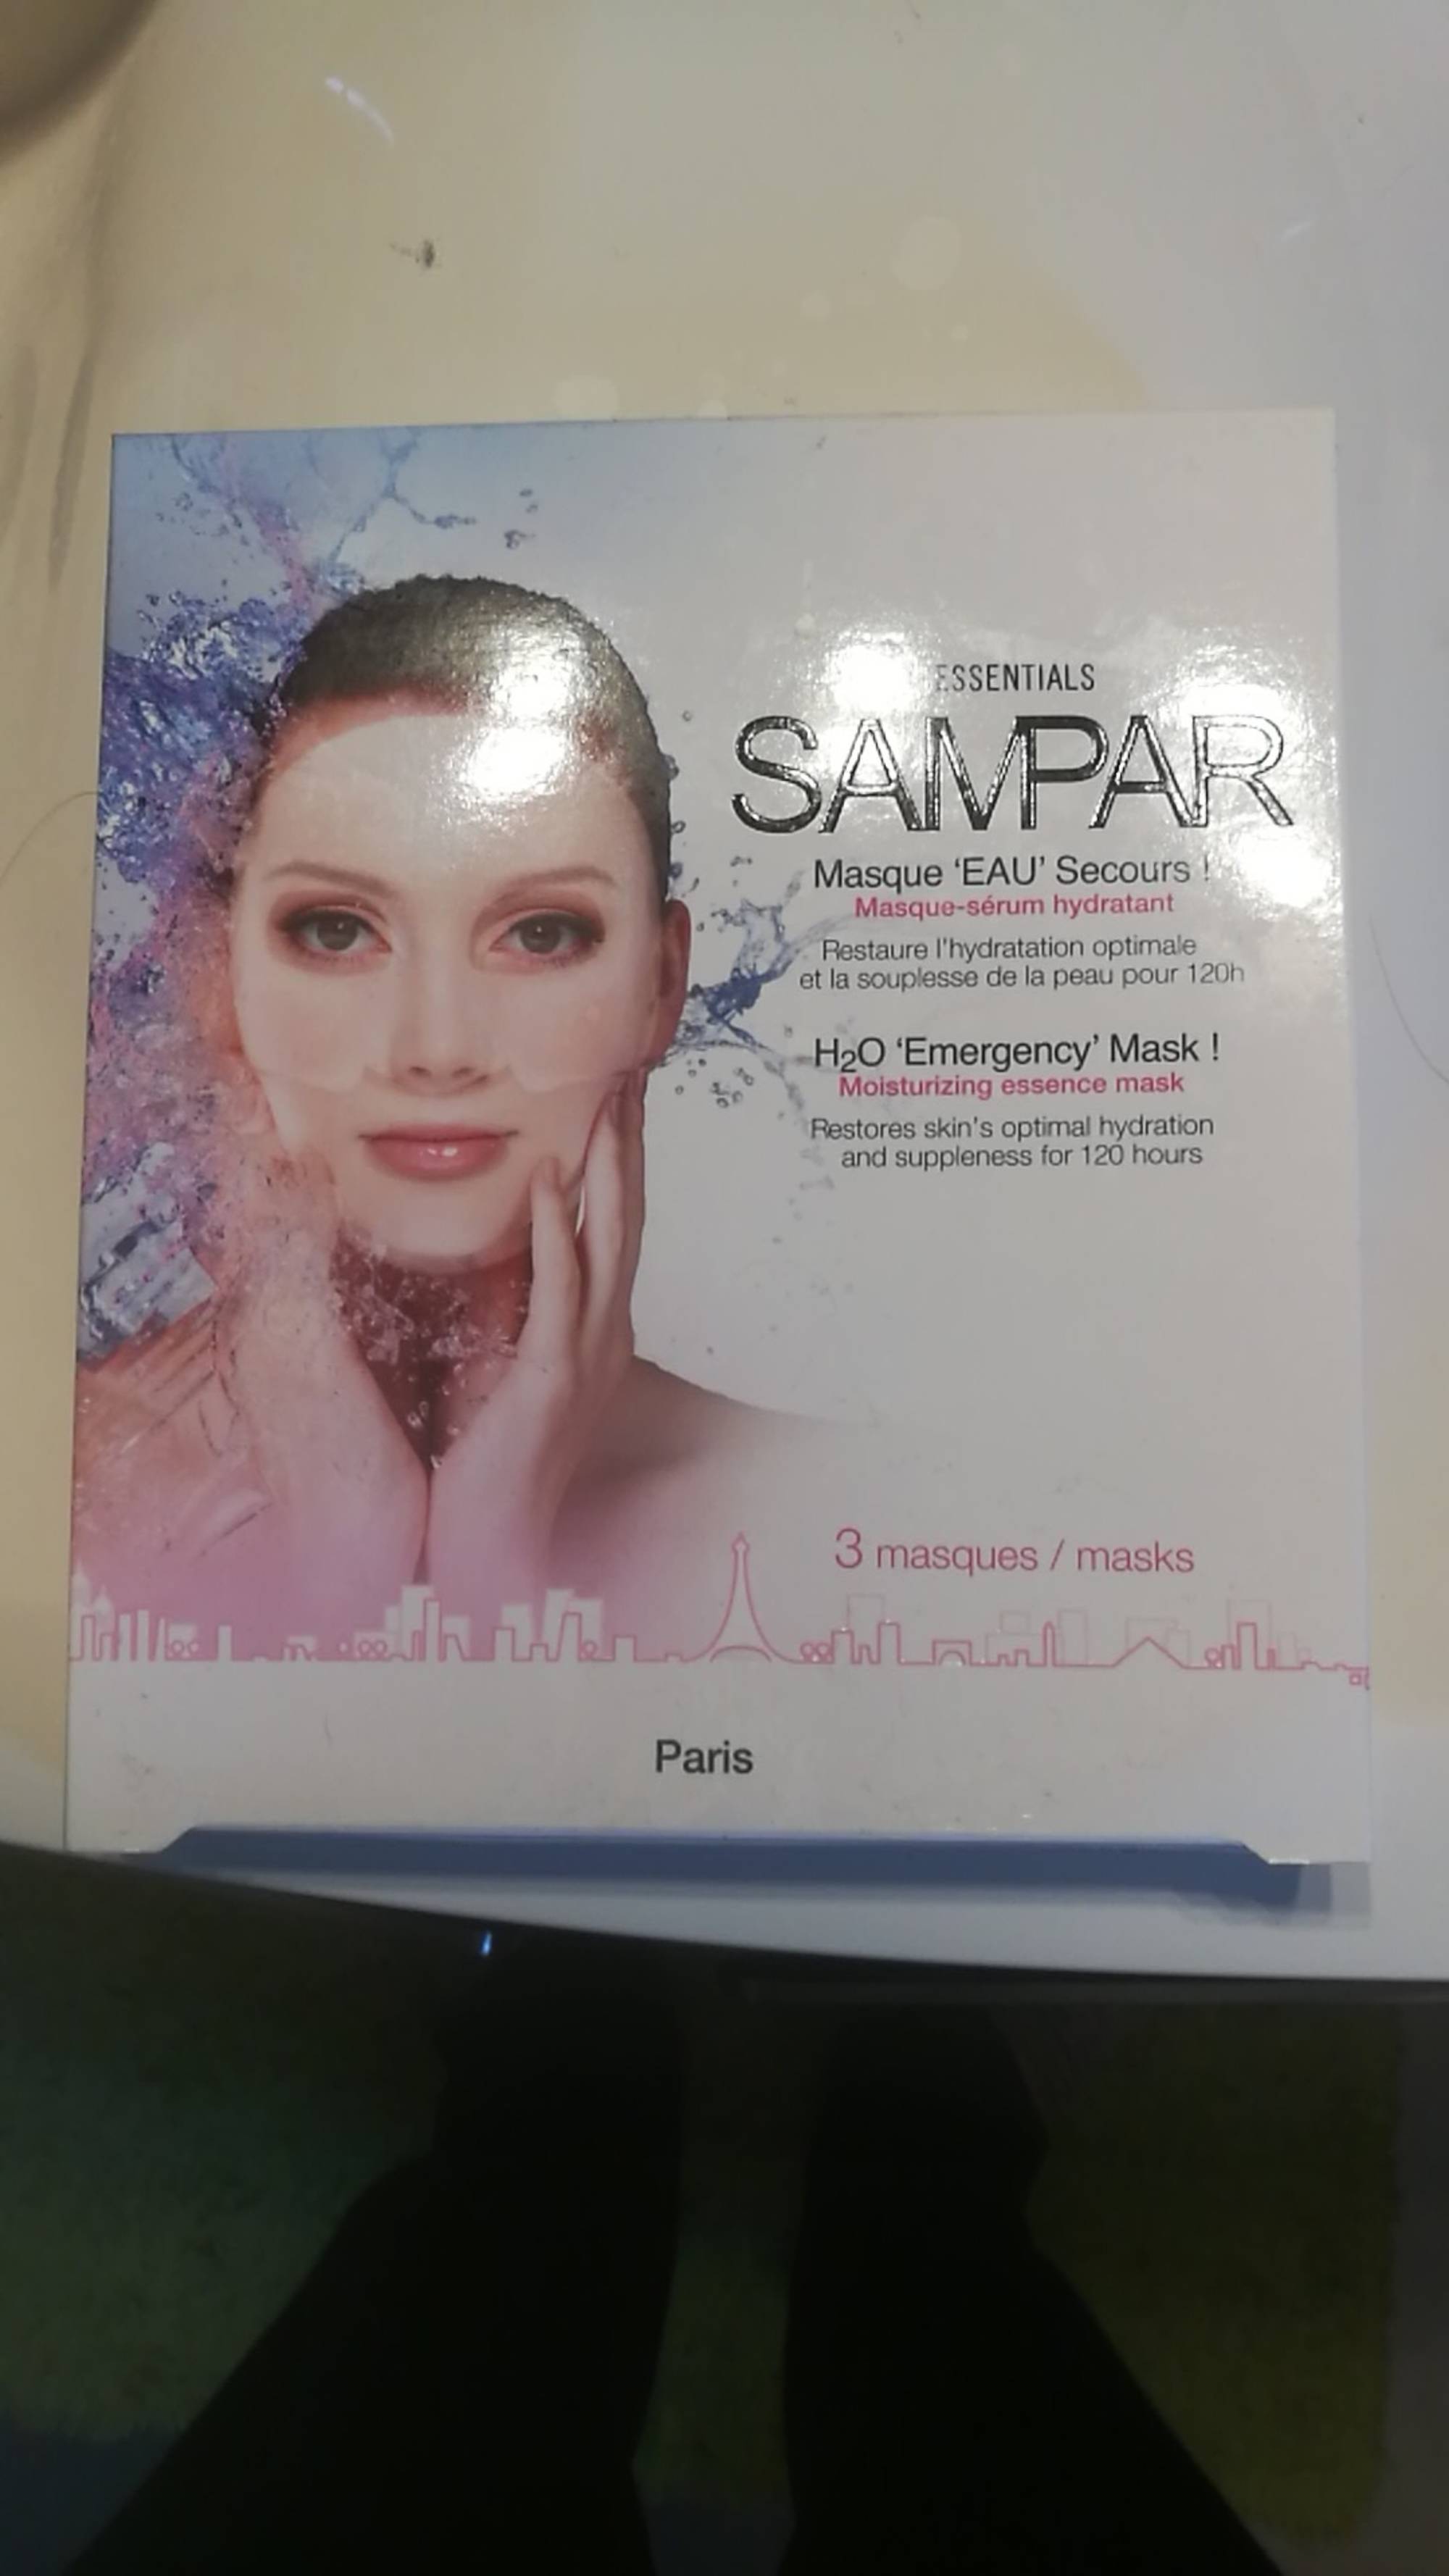 SAMPAR - Masque Eau Secours - Masque-sérum hydratant